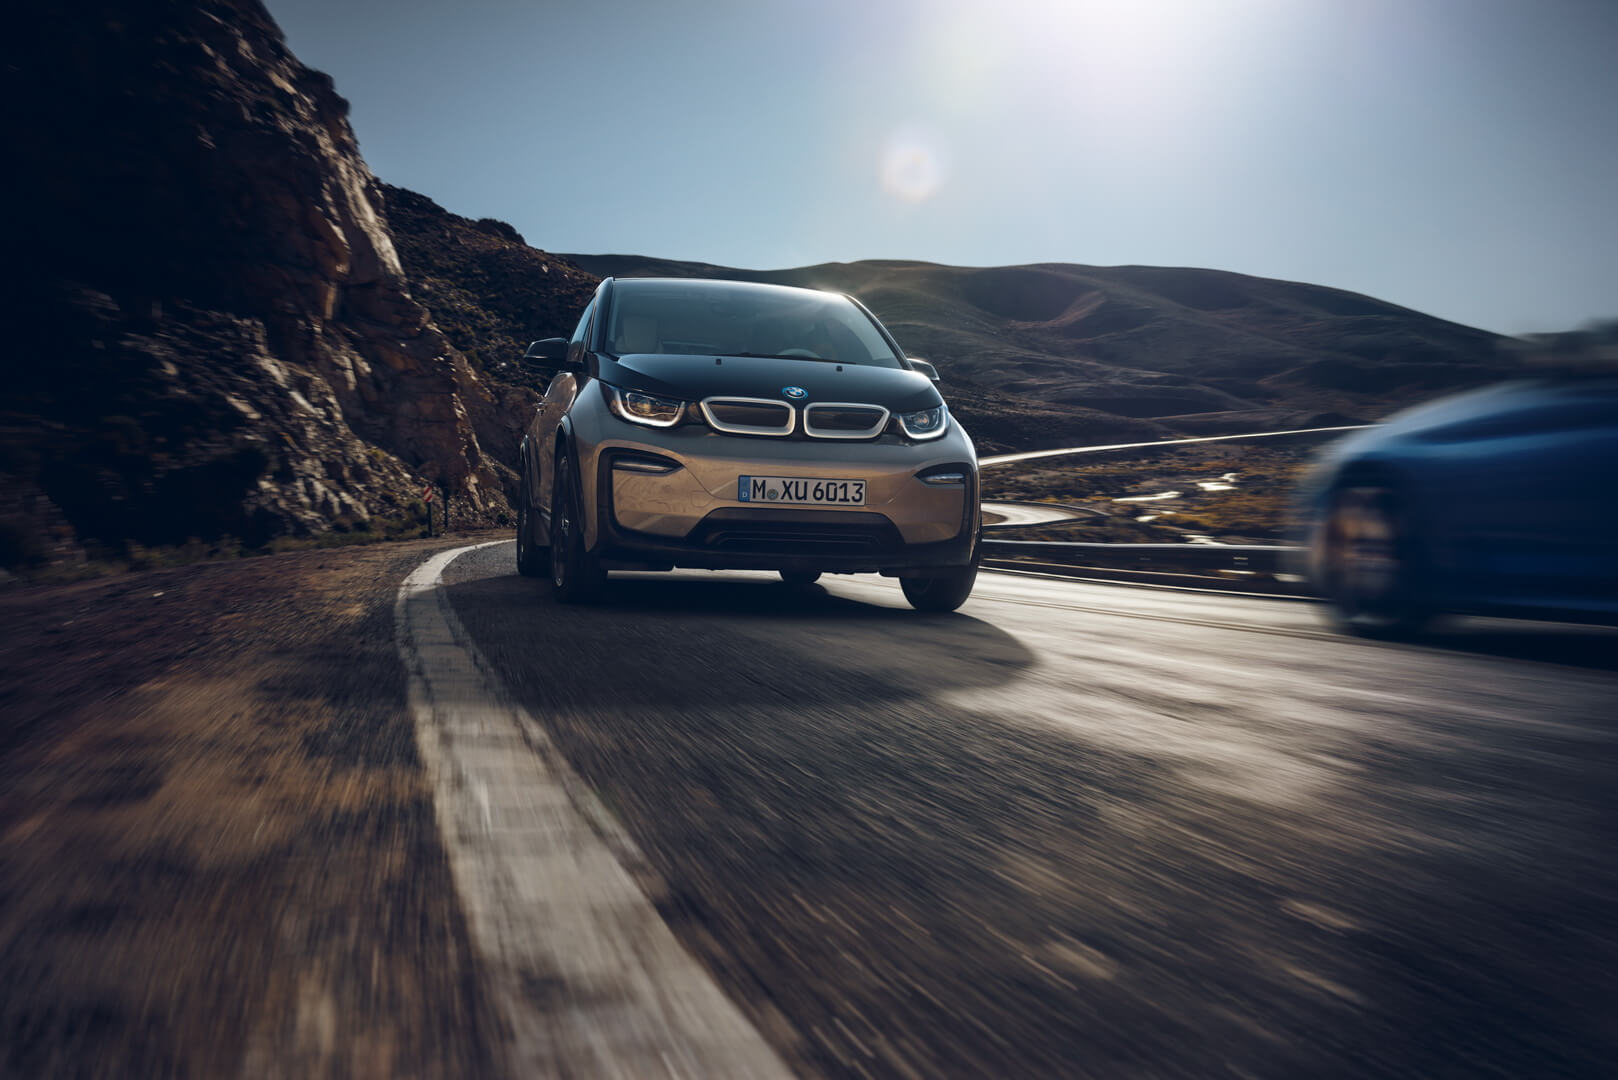 Фотография экоавто BMW i3 2019 (42.2 кВт•ч) - фото 19